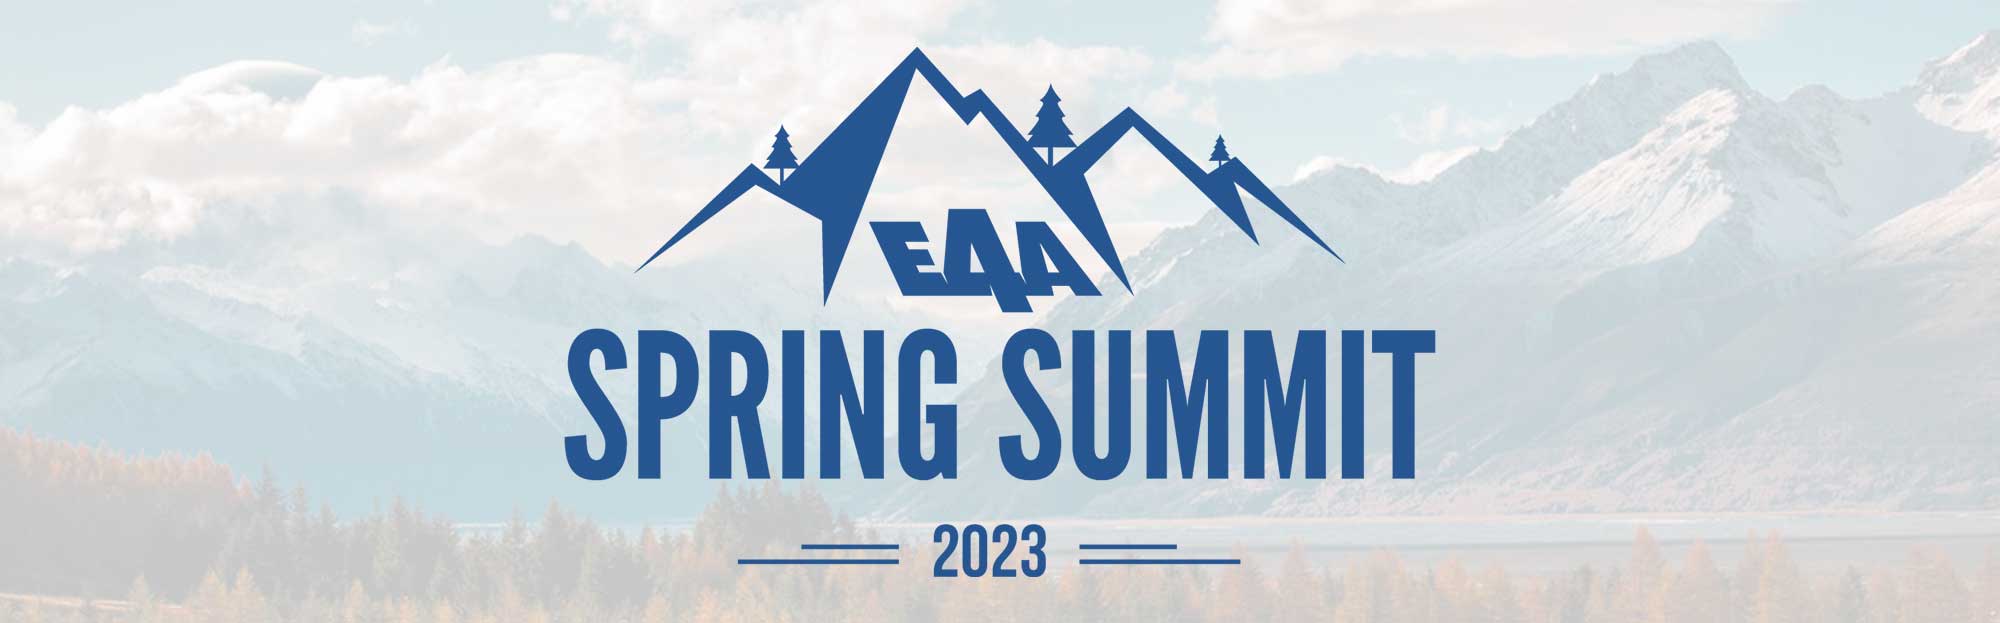 Spring Summit 2023